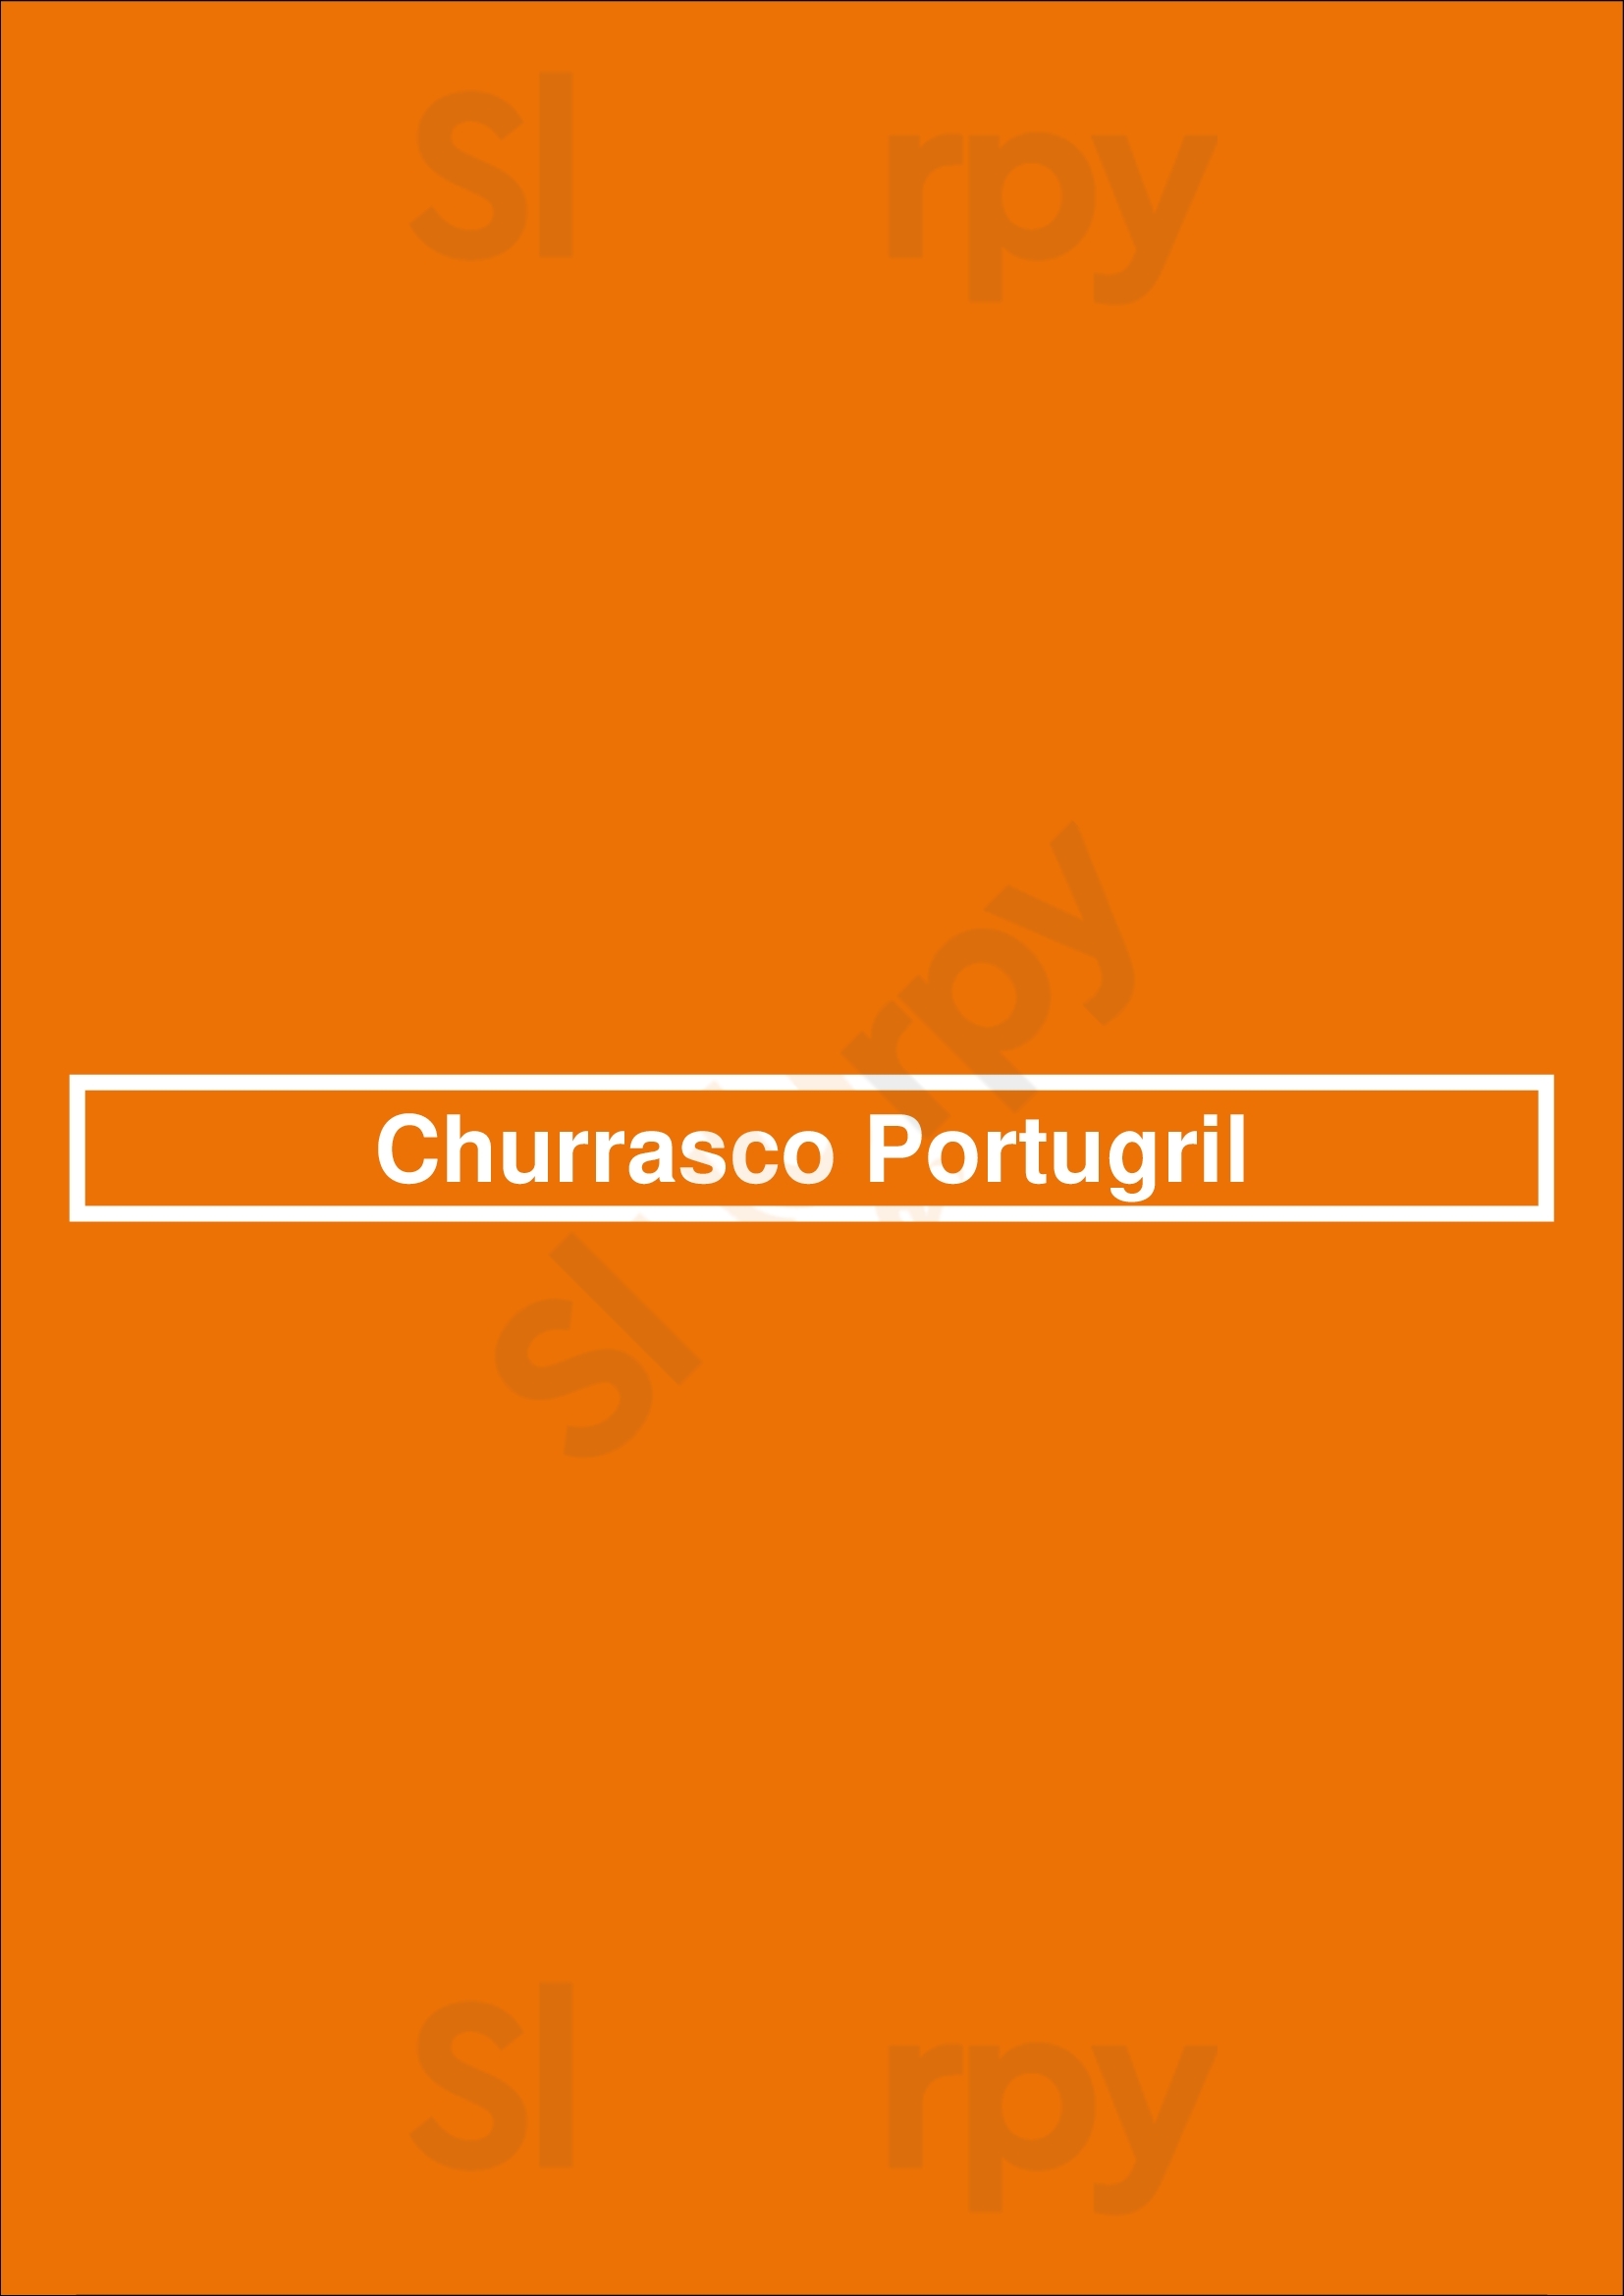 Churrasco Portugril Toronto Menu - 1